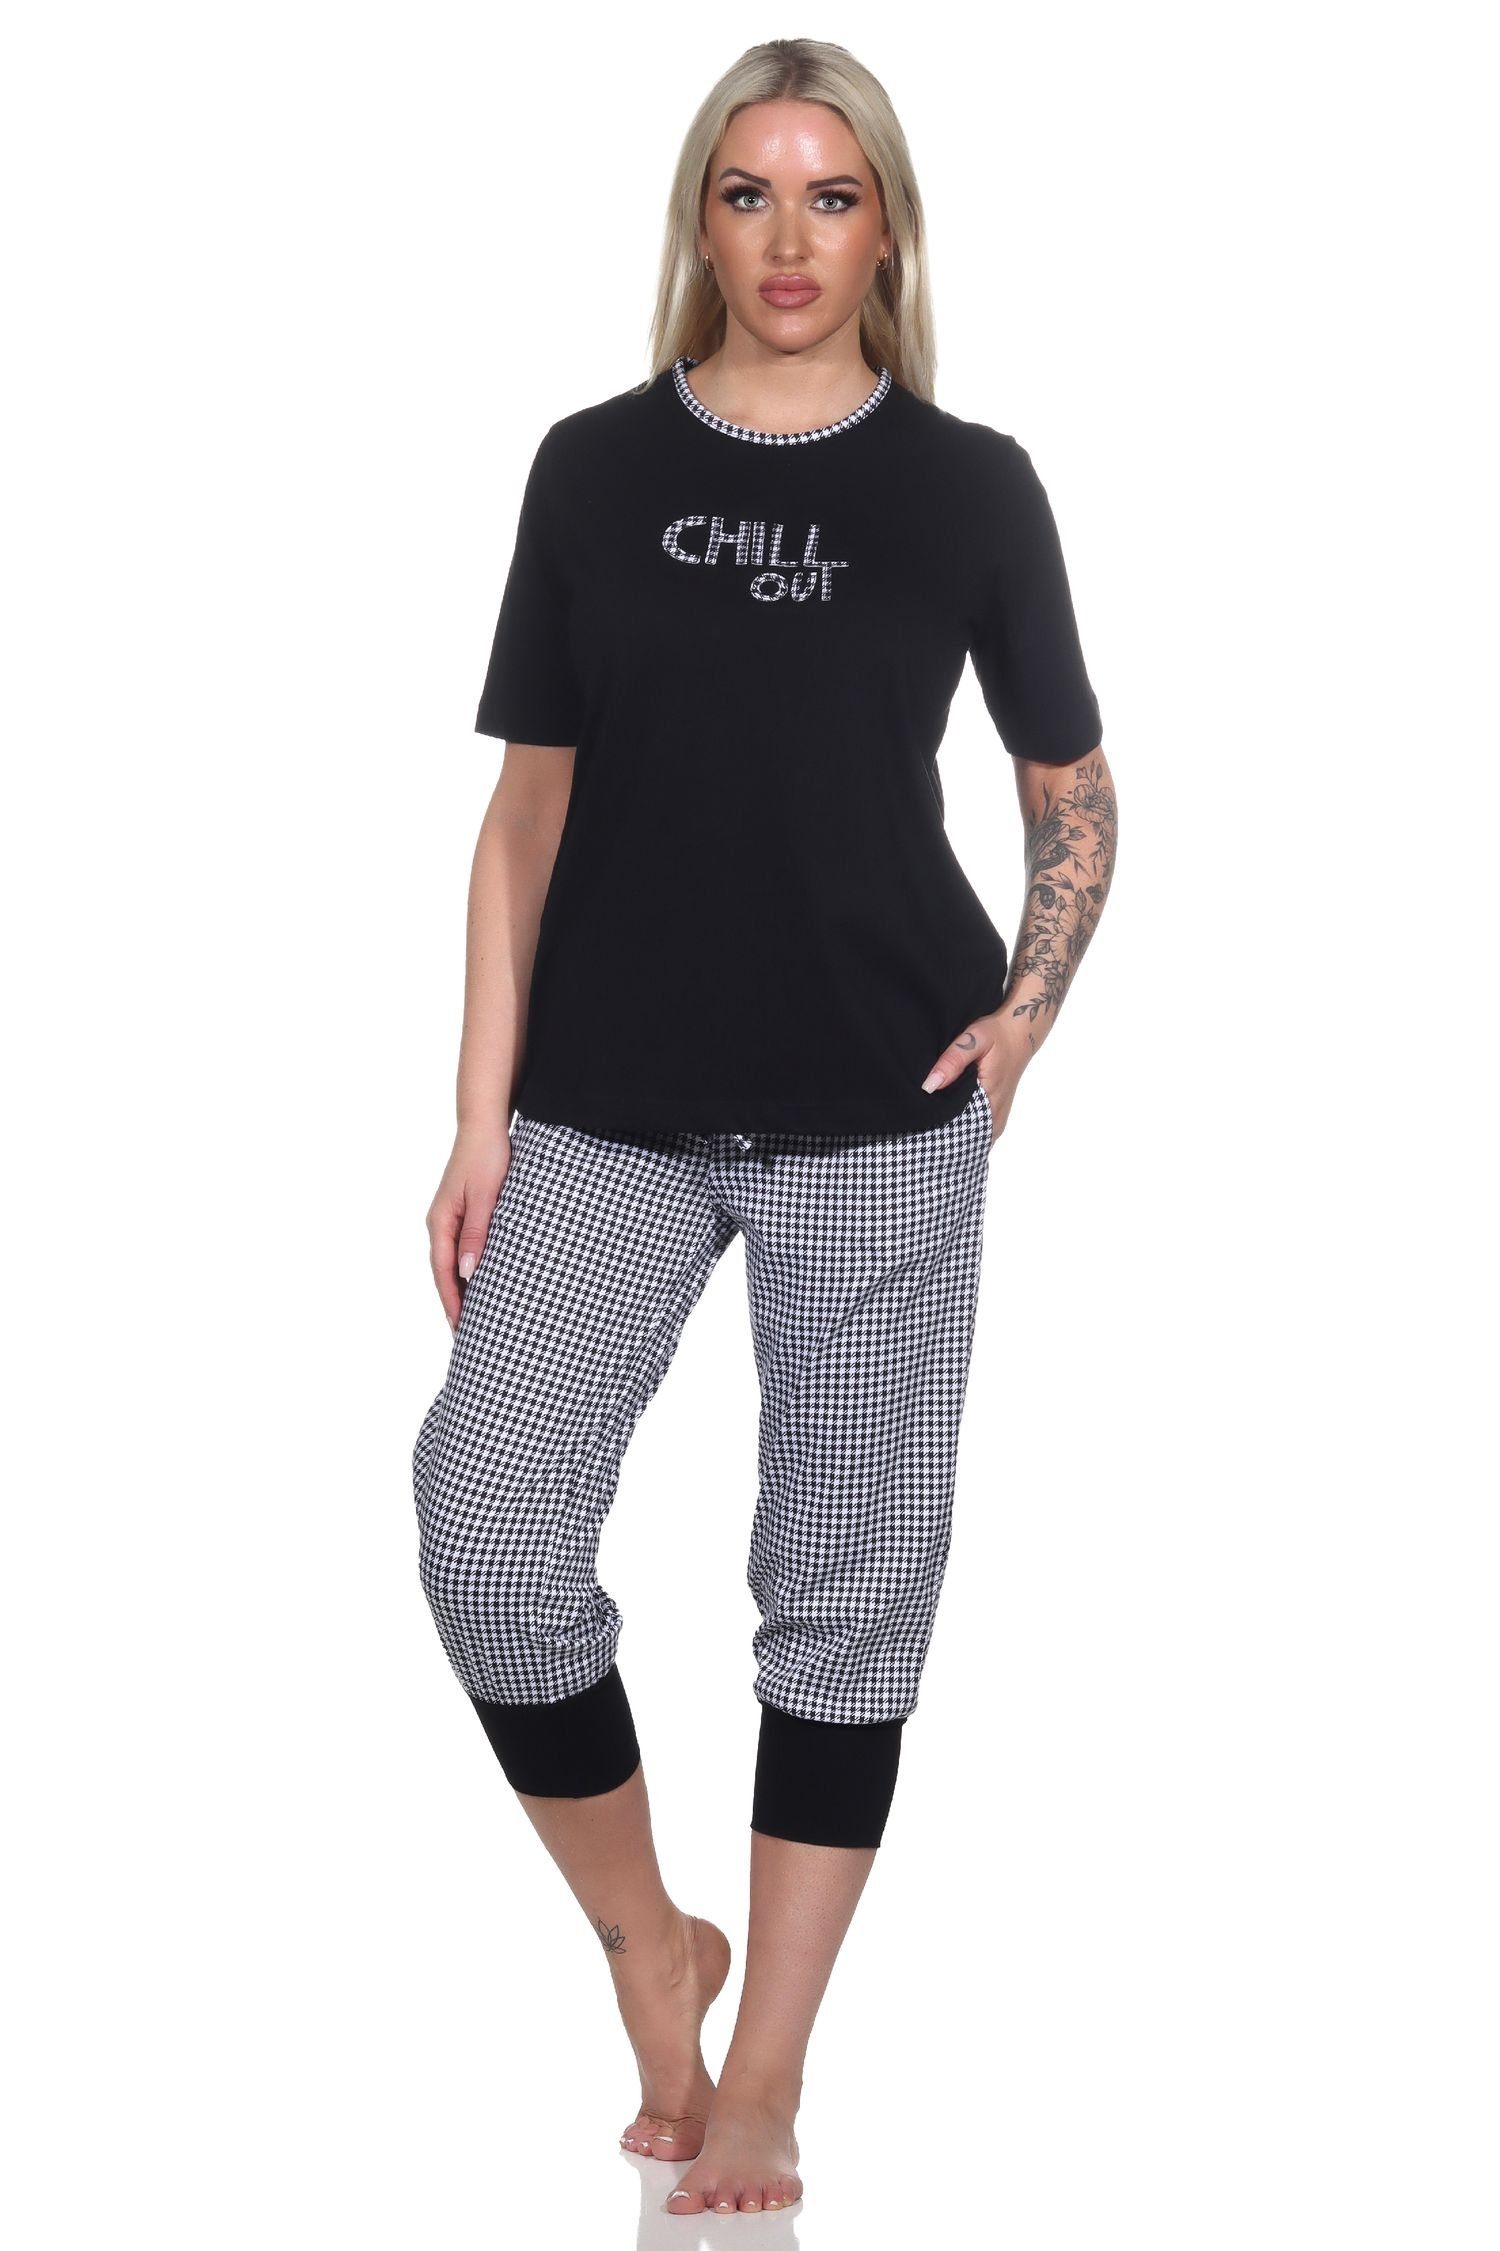 Pepita-Look, im kurzarm Pyjama auch schwarz Schlafanzug Normann Capri Übergrößen in Damen